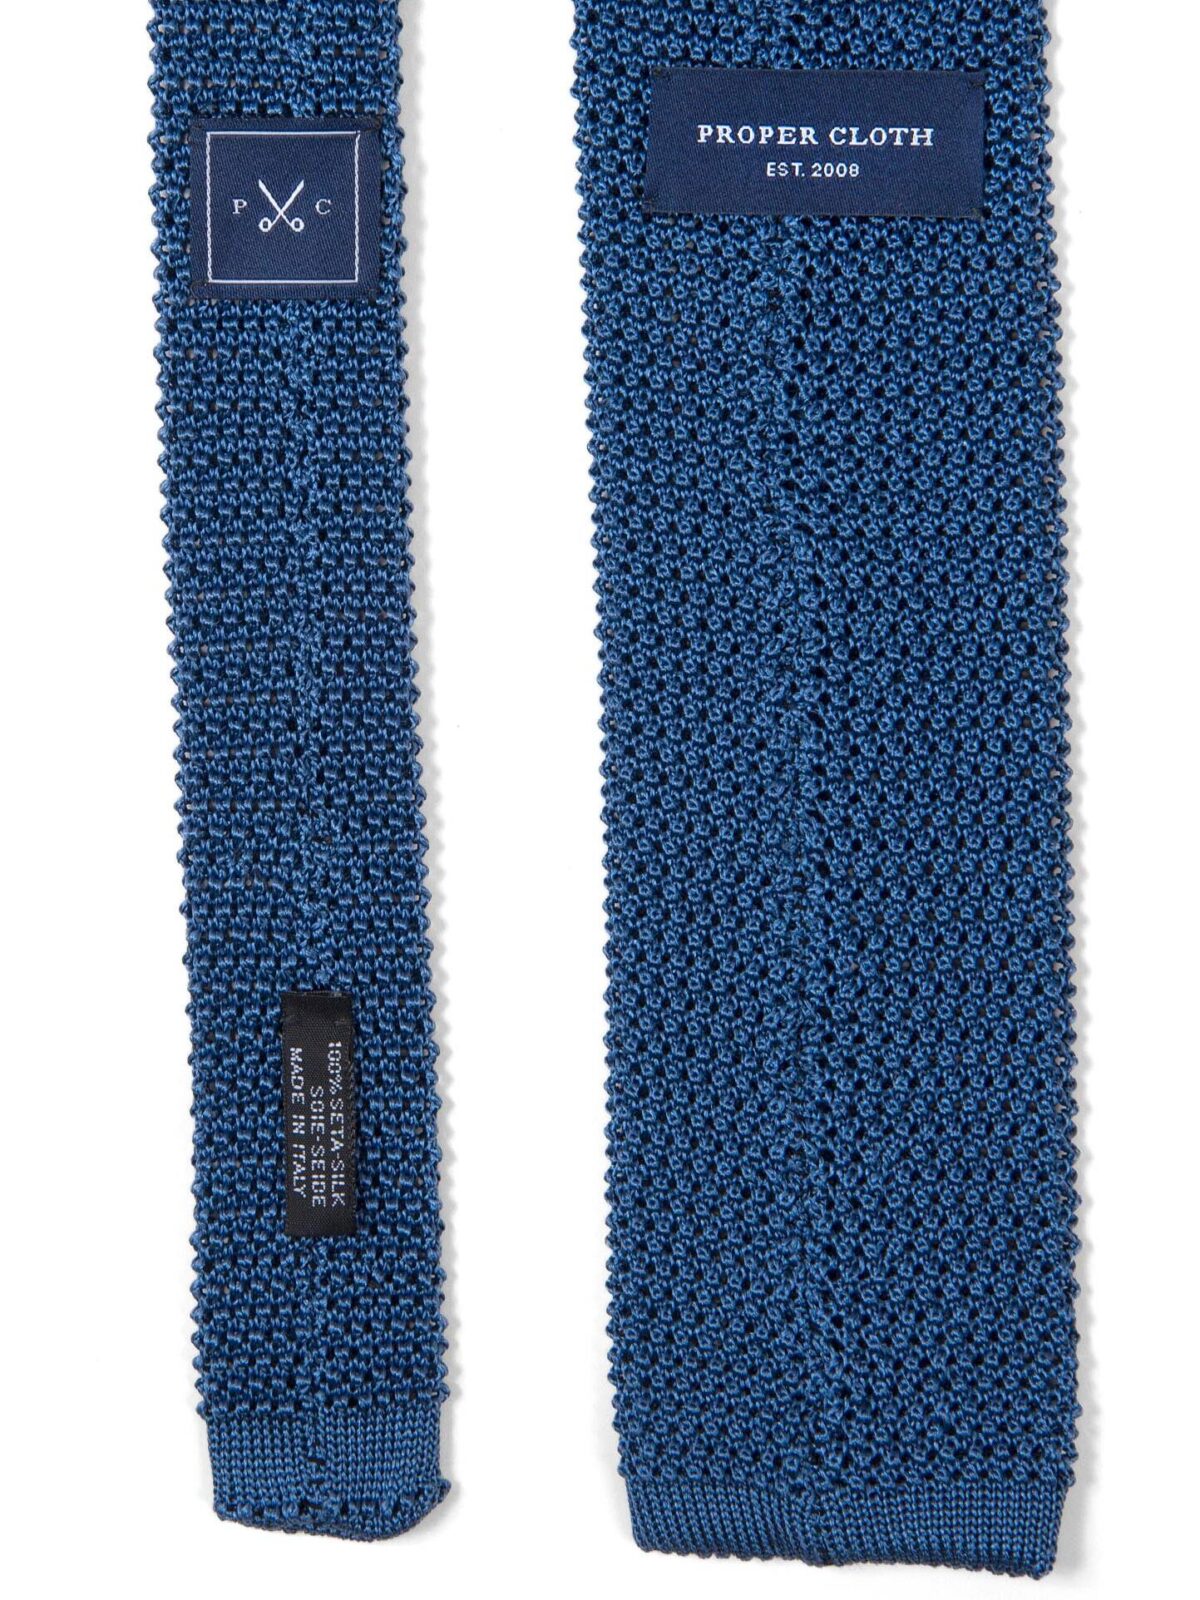 Blue Silk Knit Tie